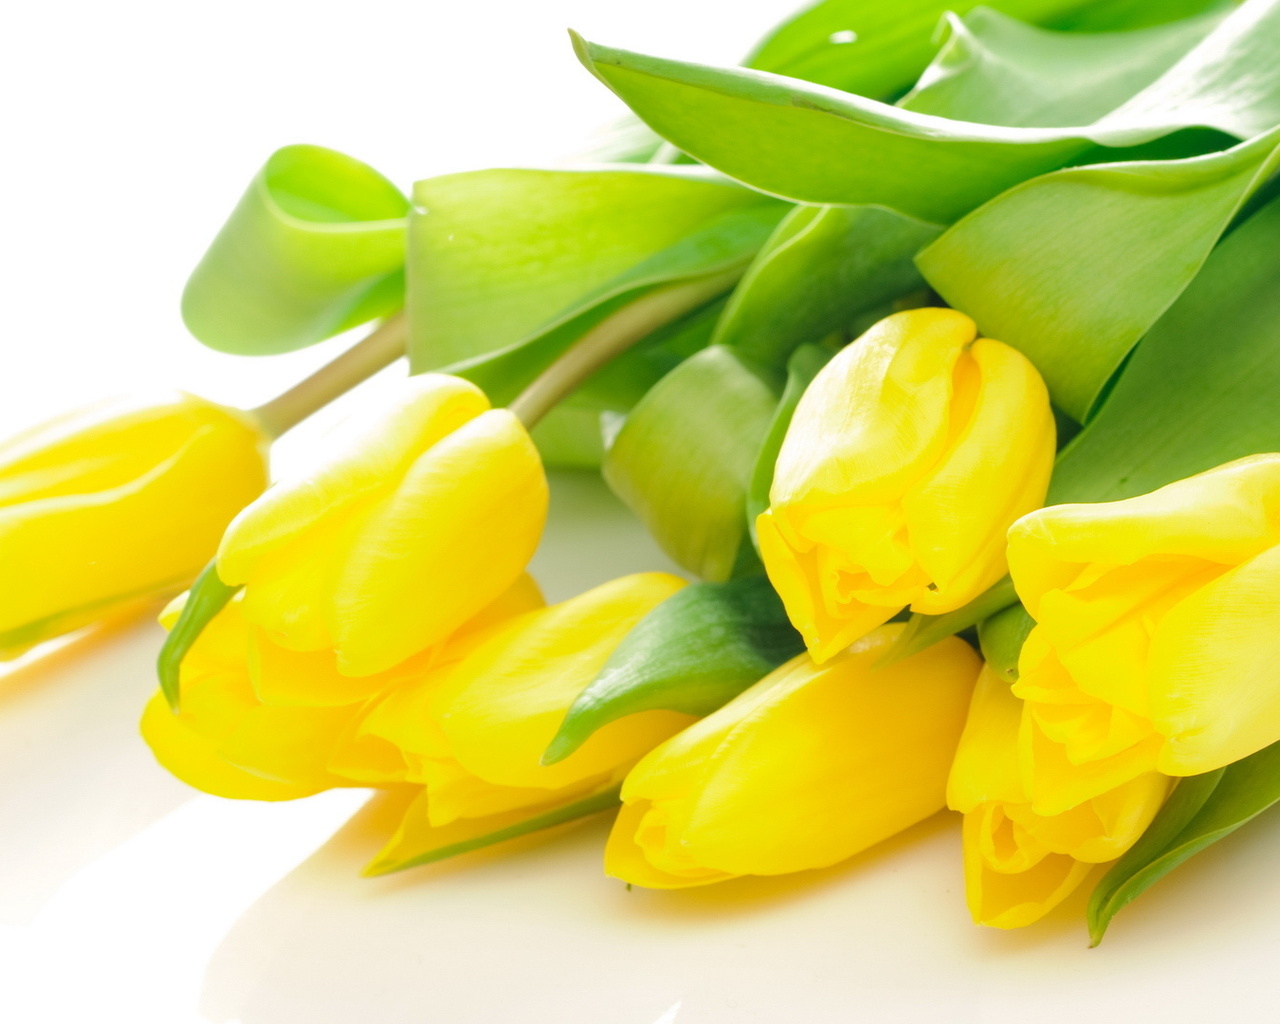 Ебанько желтые тюльпаны текст. Цветы тюльпаны. Желтые тюльпаны. Желтые тюльпаны цветы. Тюльпаны фон.